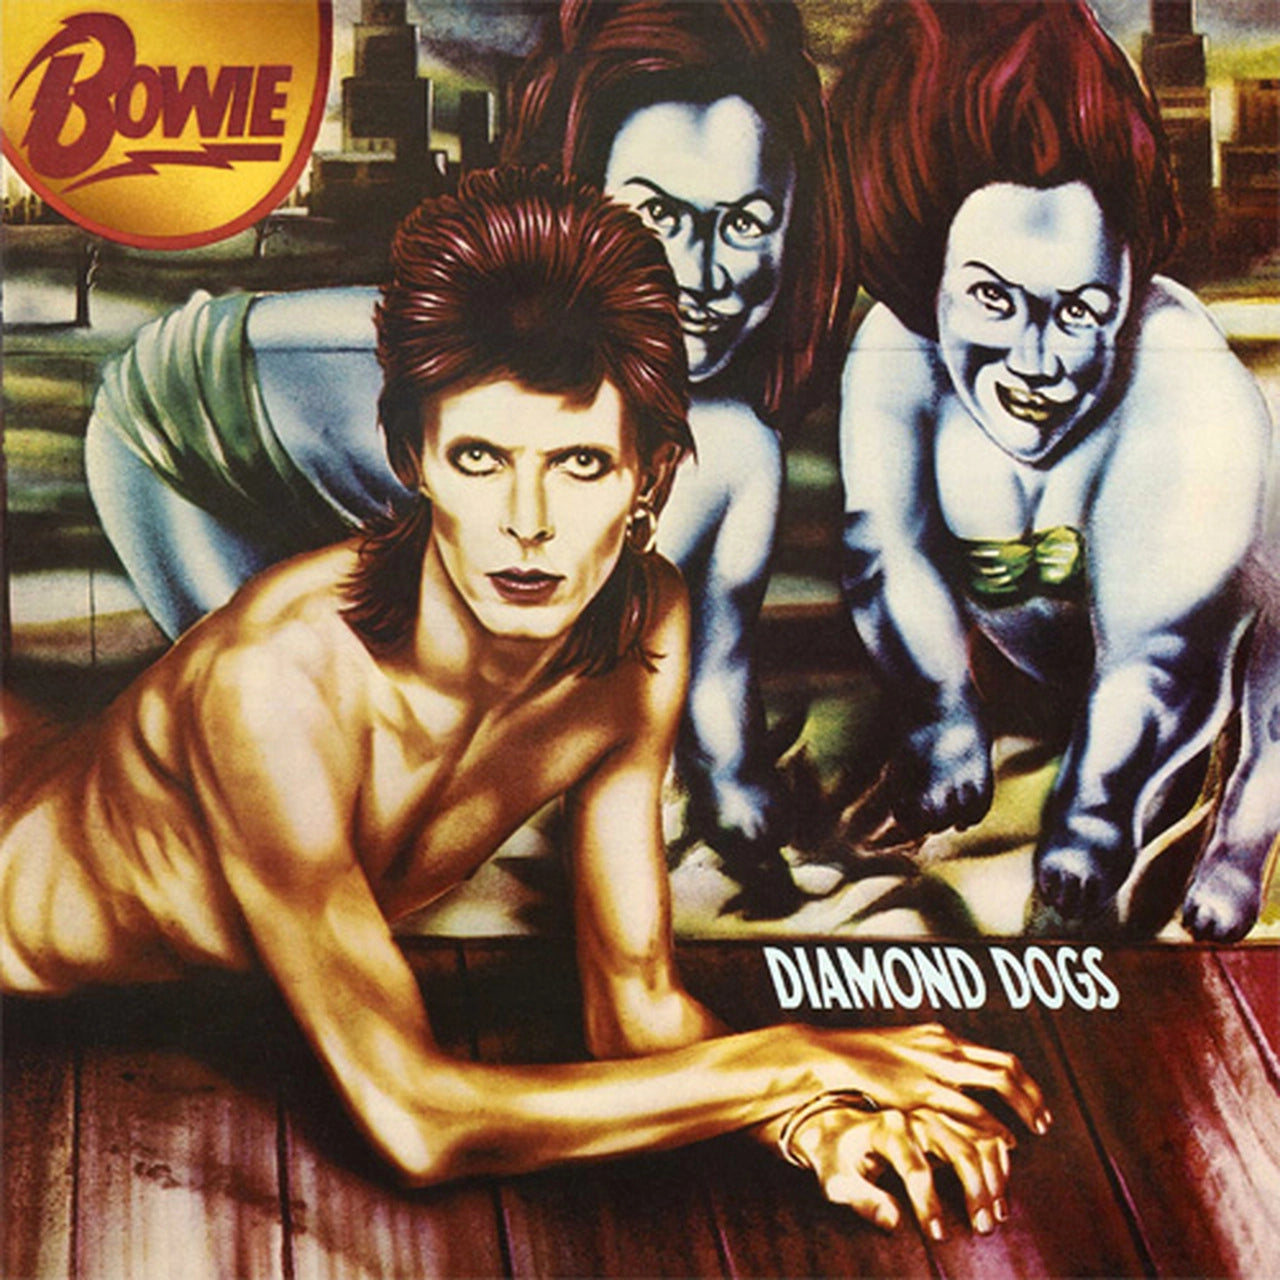 David Bowie - Diamond Dogs [LP] (180 Gram, 2016 remastered version)